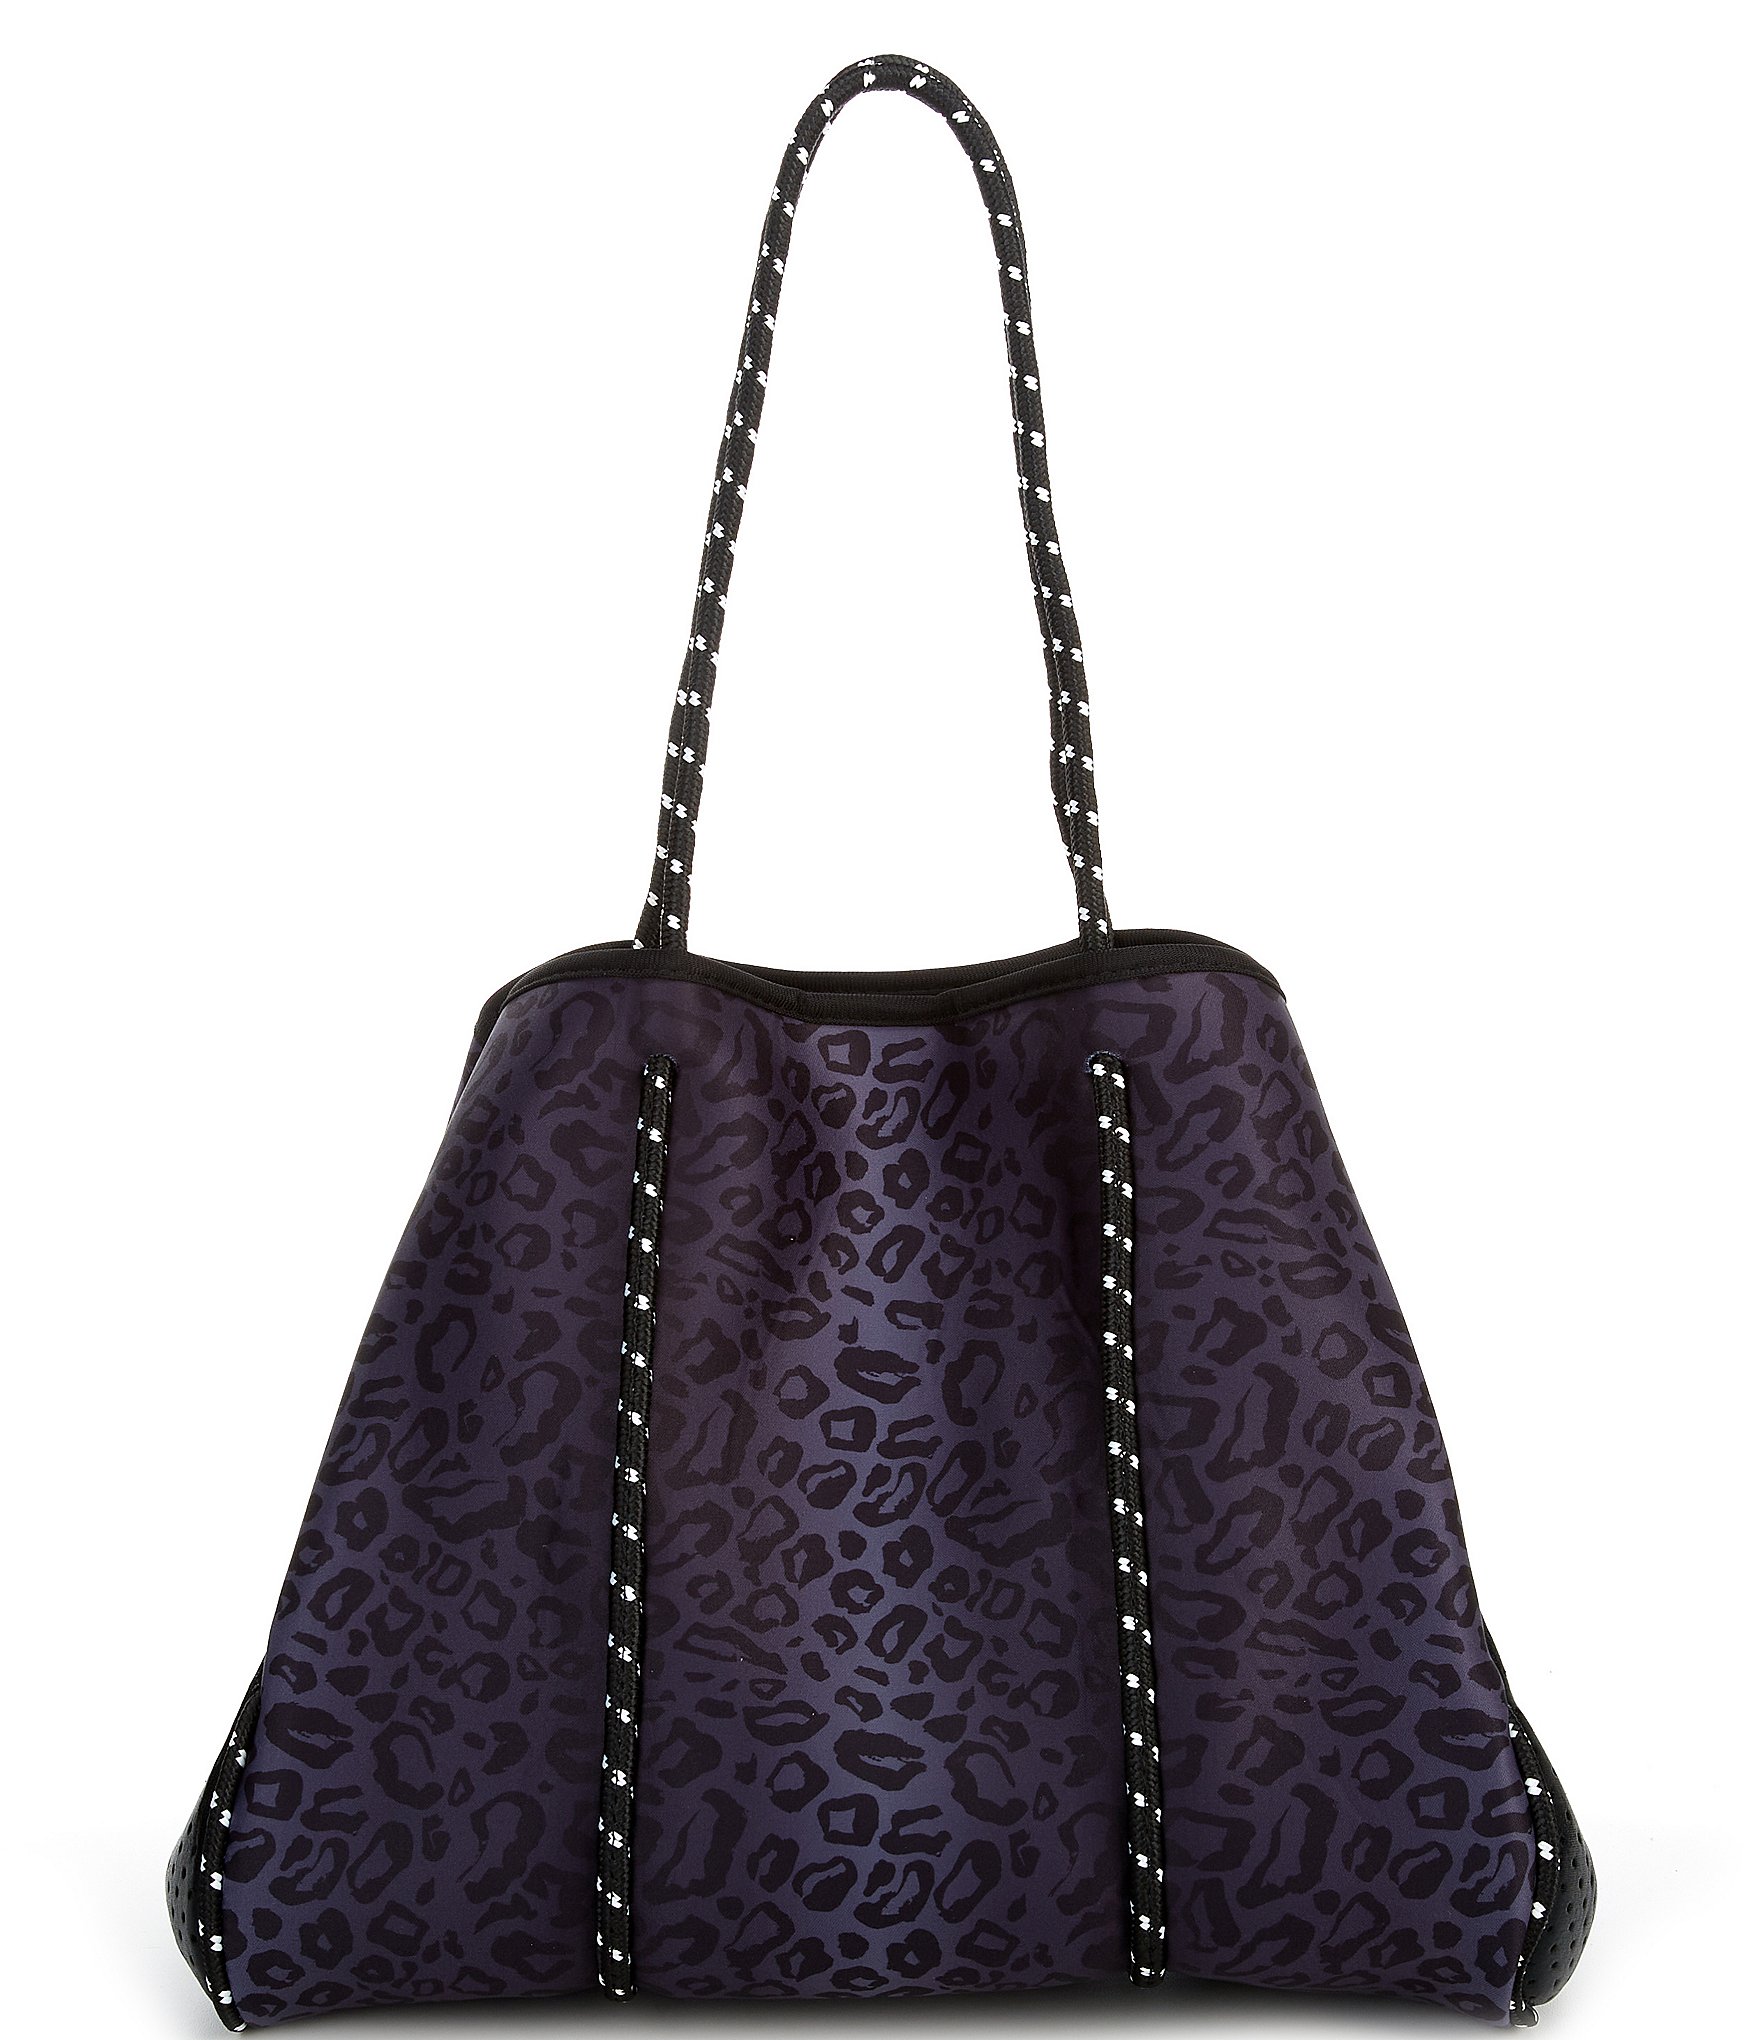 Black Leopard Tote Bags Women Casual Canvas Purse Cowhide Tote Bag Animal  Print Cheetah Shoulder Handbag For Women Fashion Bag - AliExpress